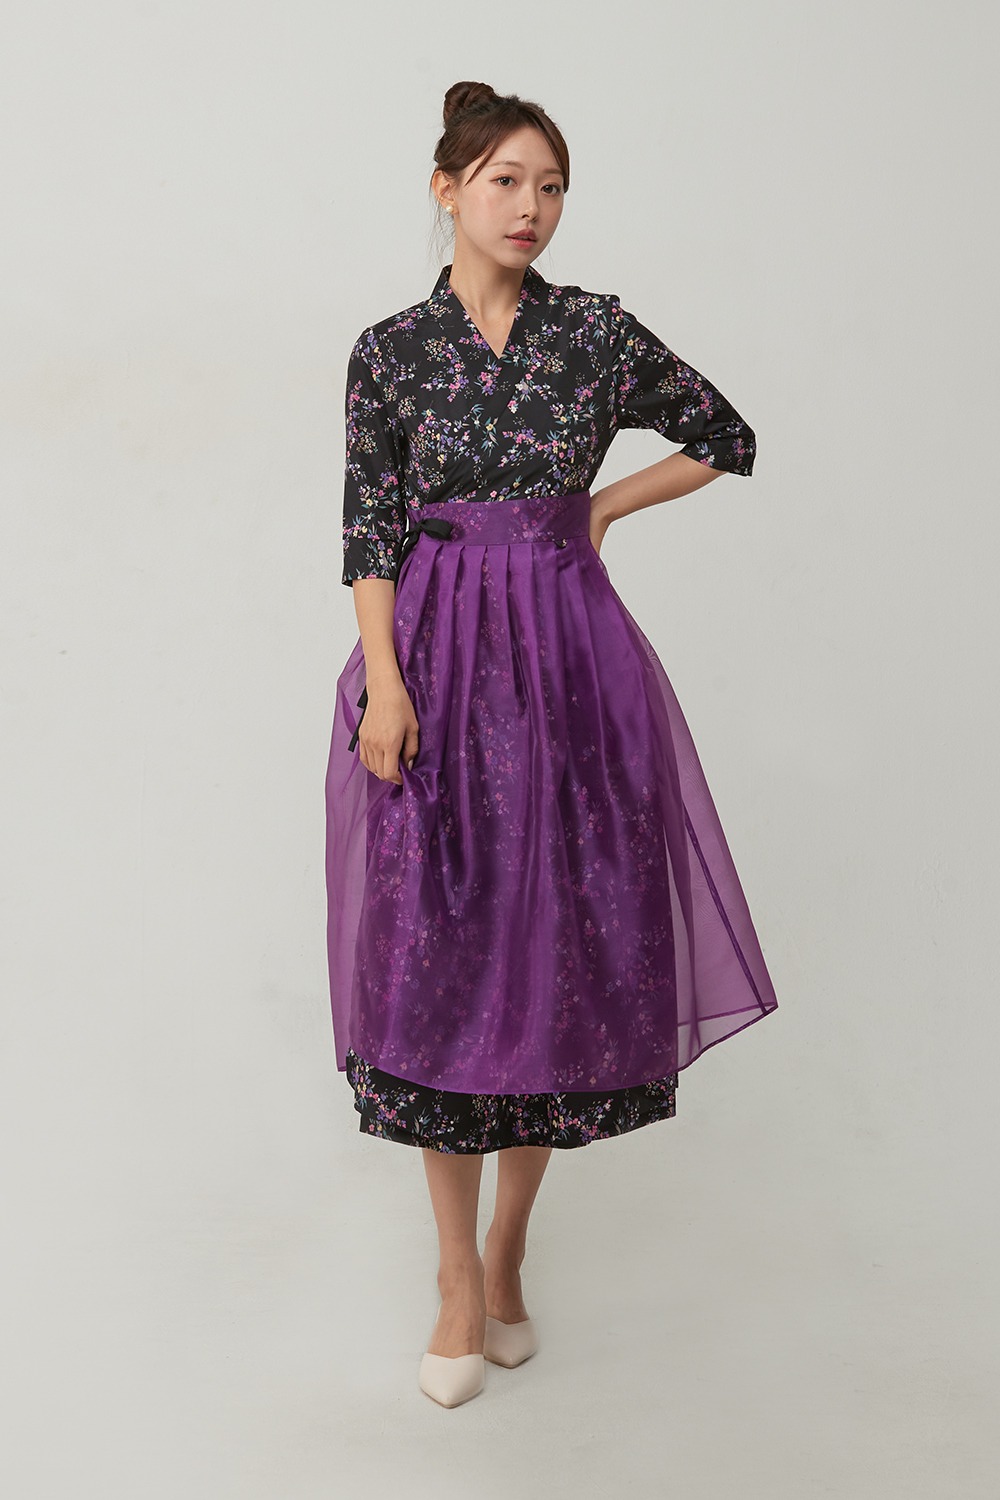 Yeomi Double Layer Chulick Dress [Purple]